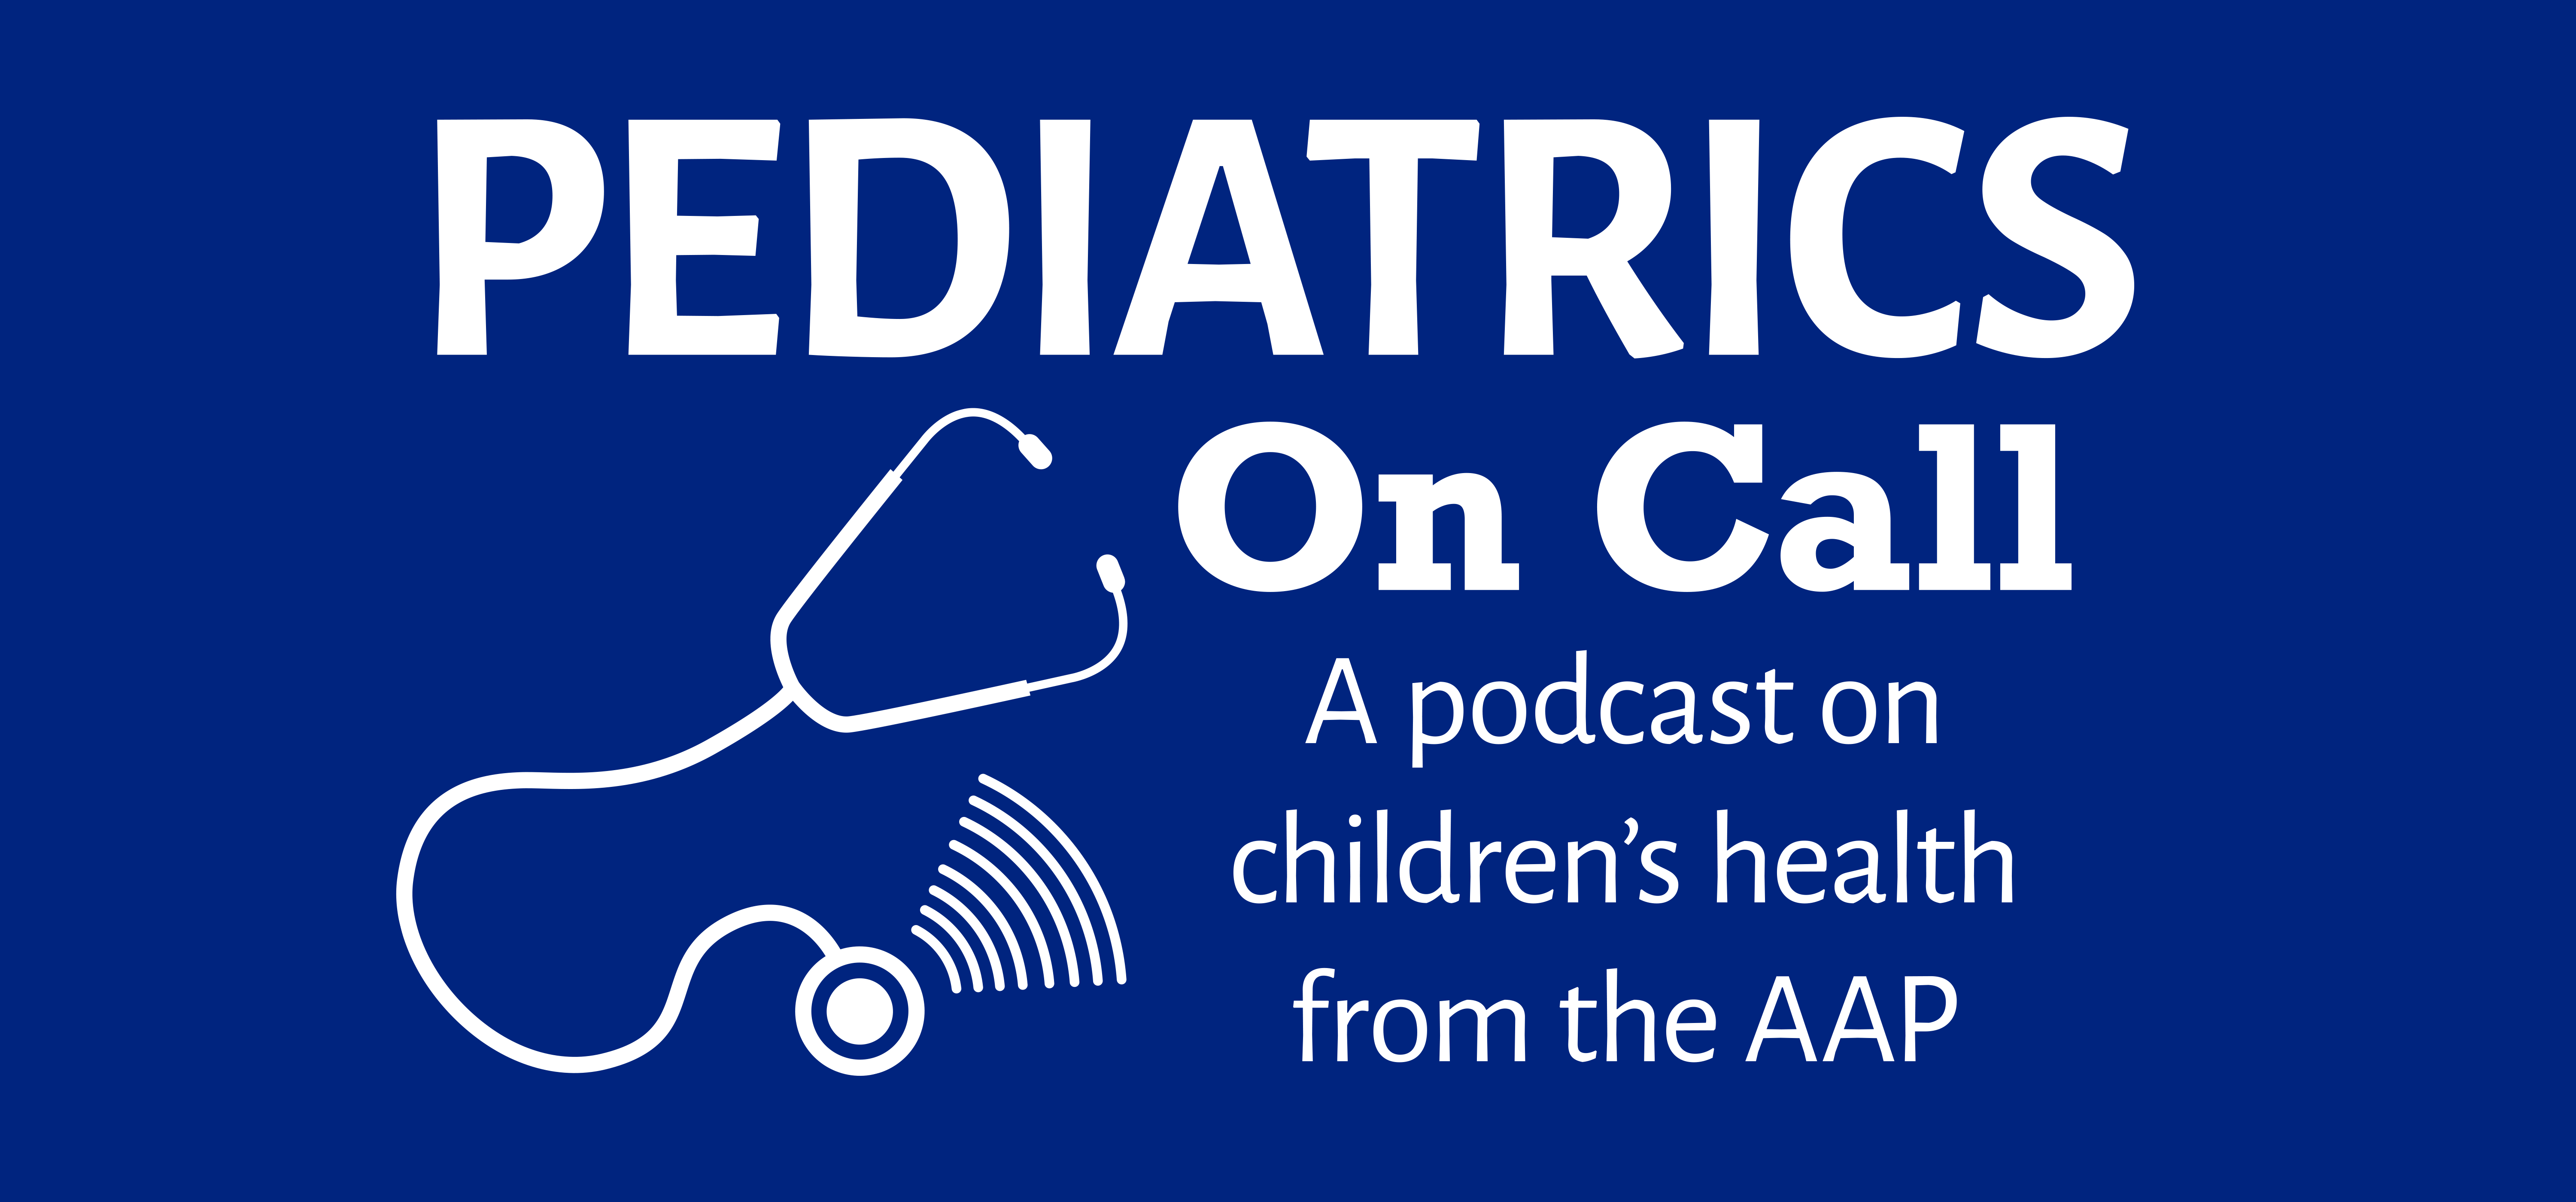 Pediatrics On Call Podcast